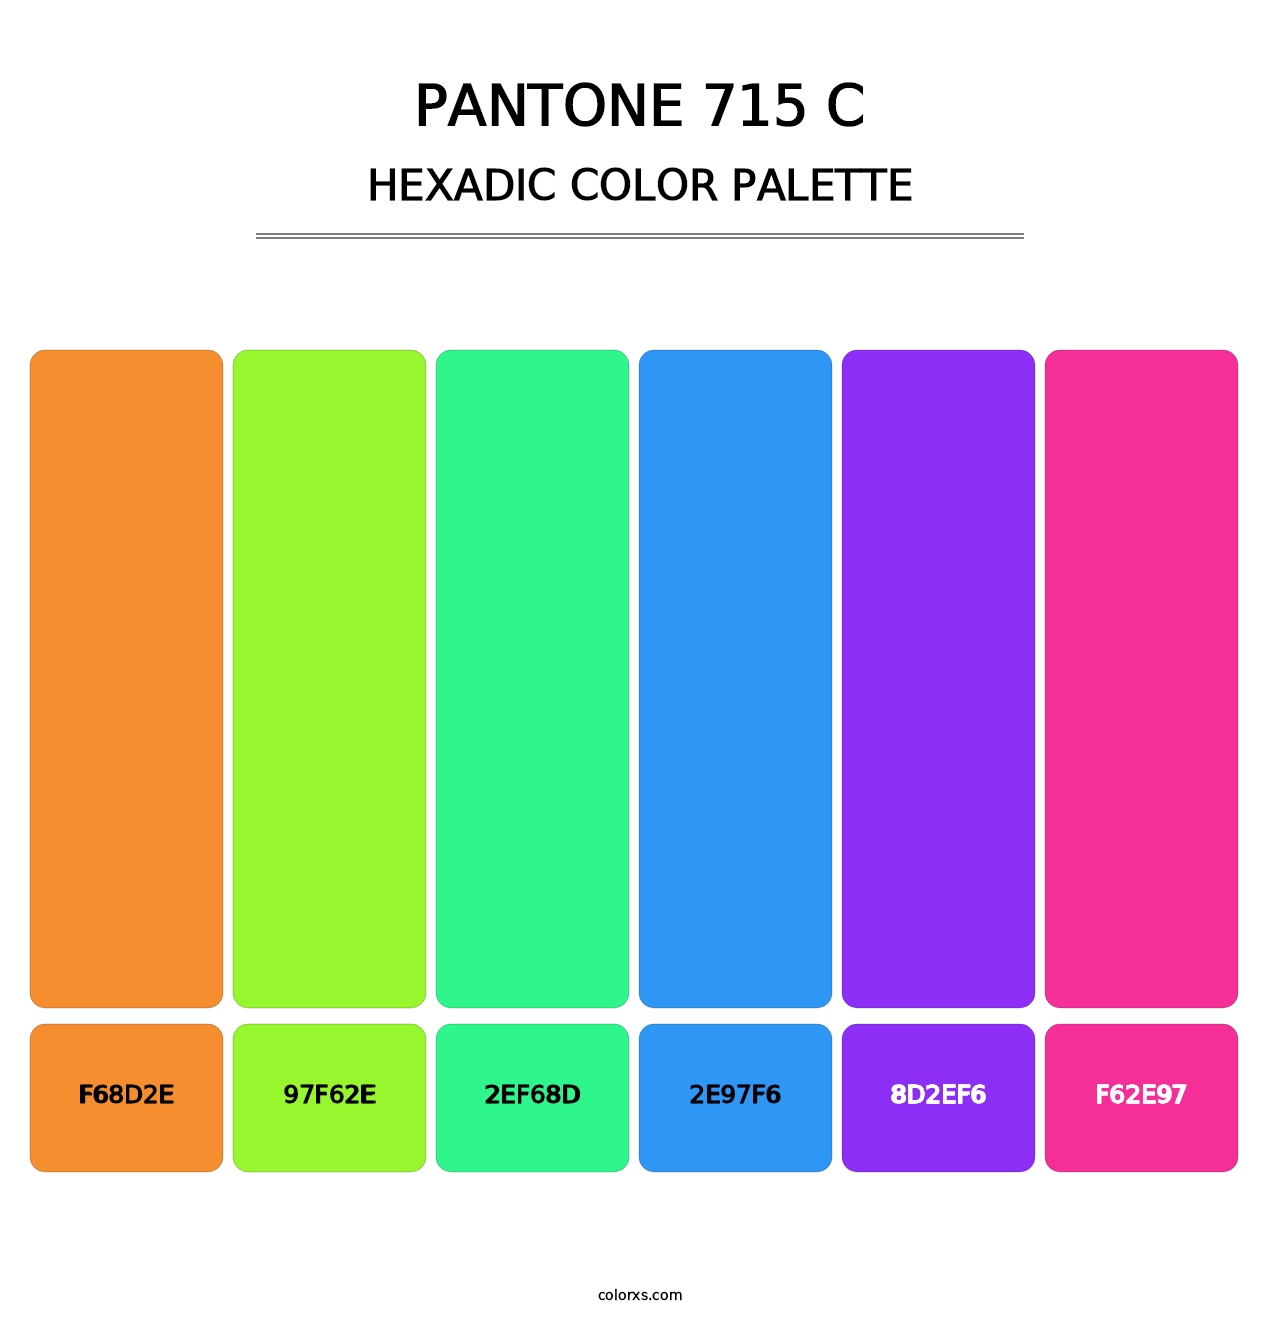 PANTONE 715 C - Hexadic Color Palette